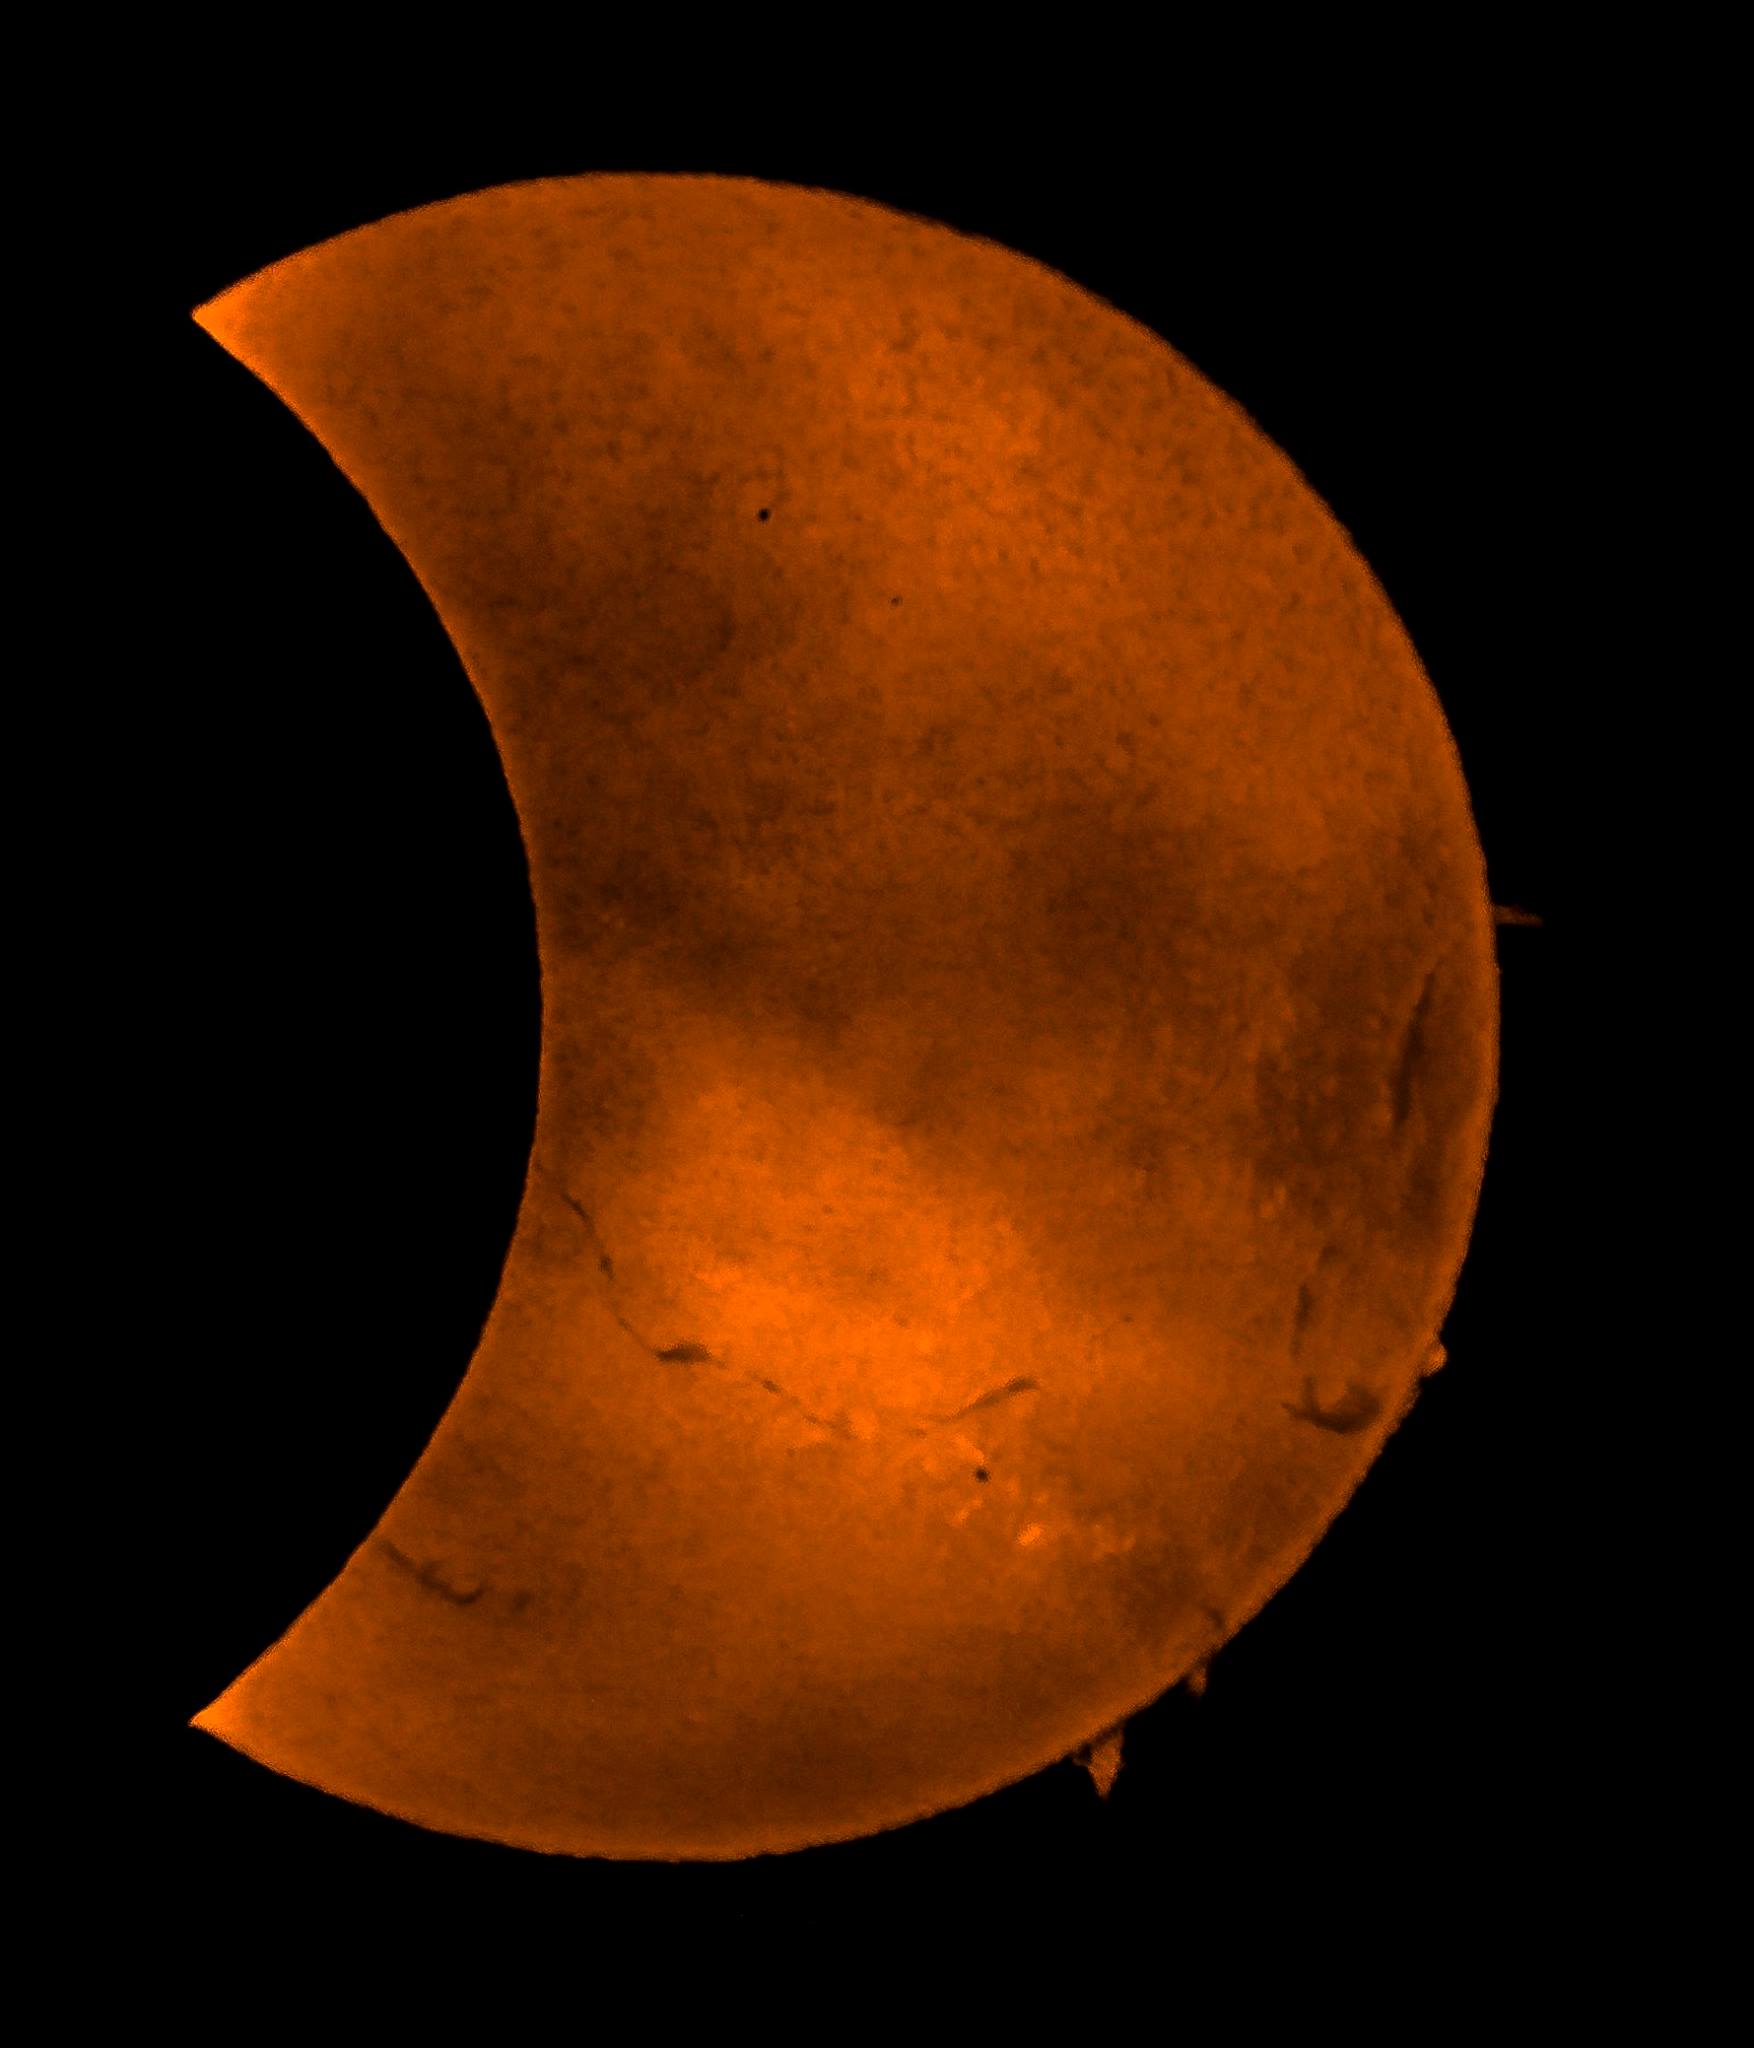 The eclipse by HCO member Matt Armitage